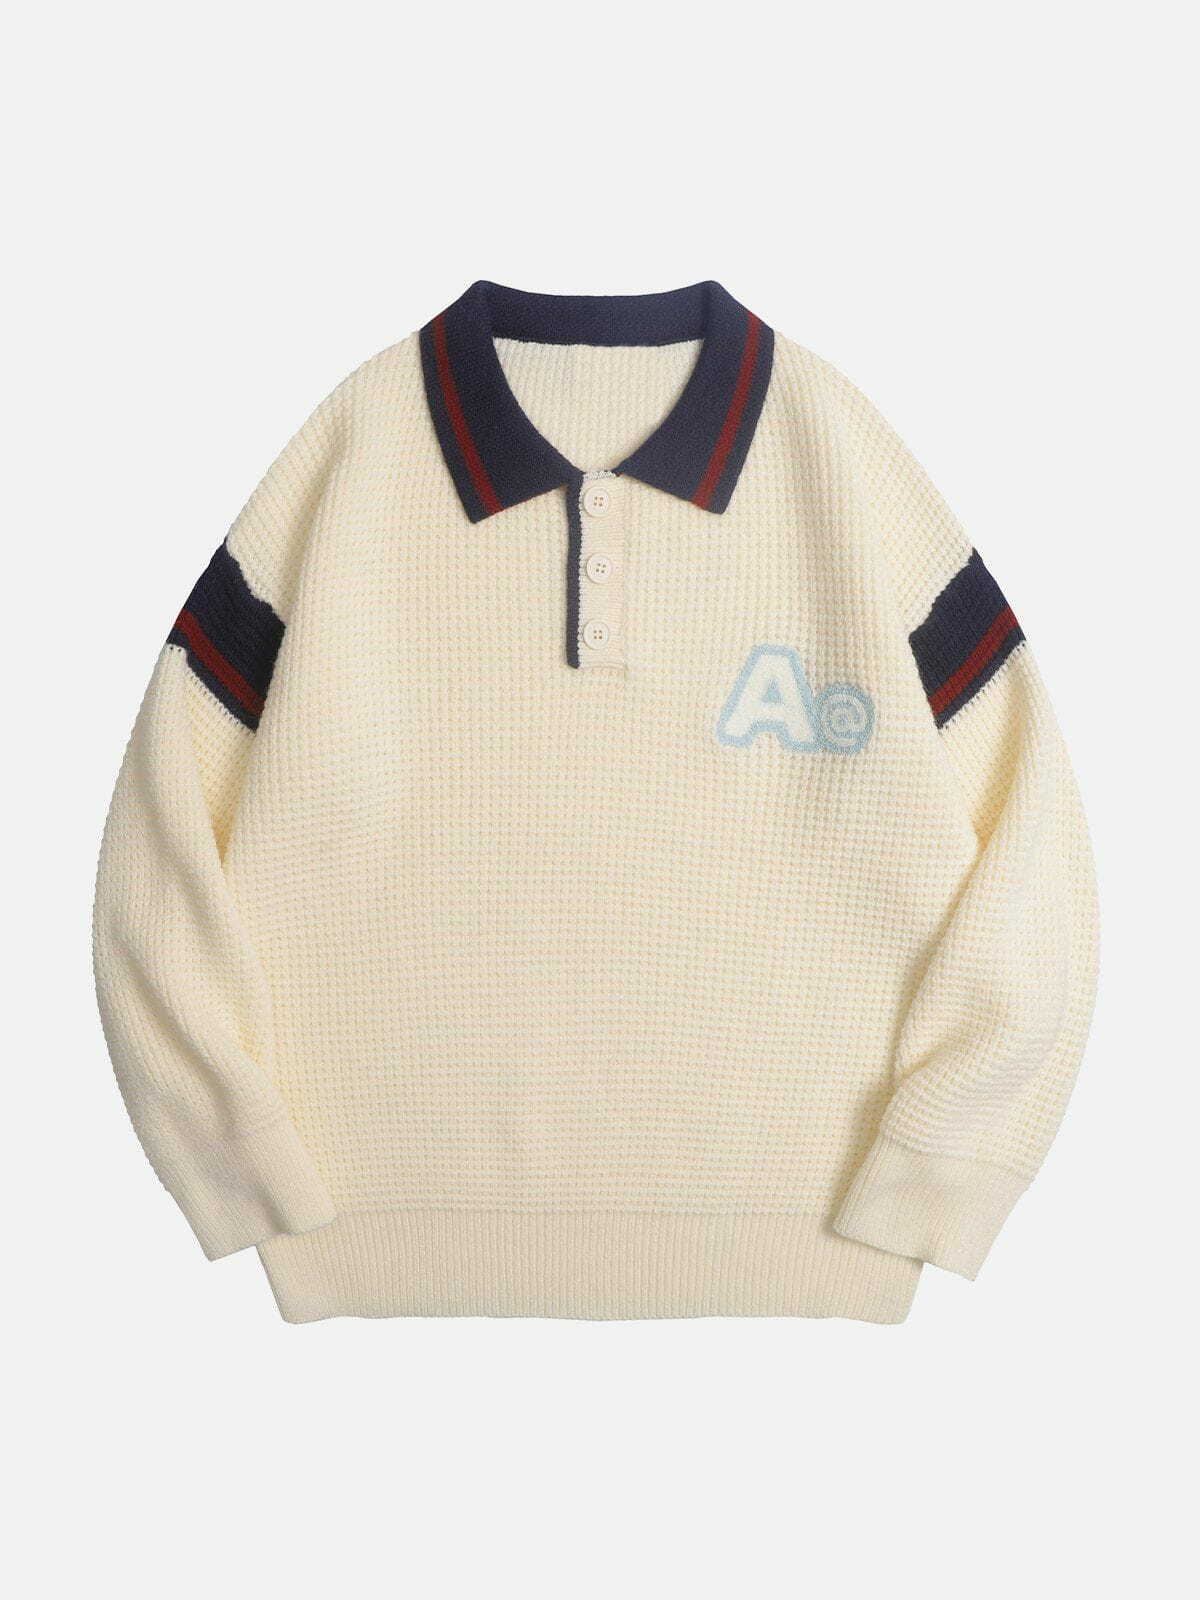 boutique vintage polo sweater retro cool & urban style 4001